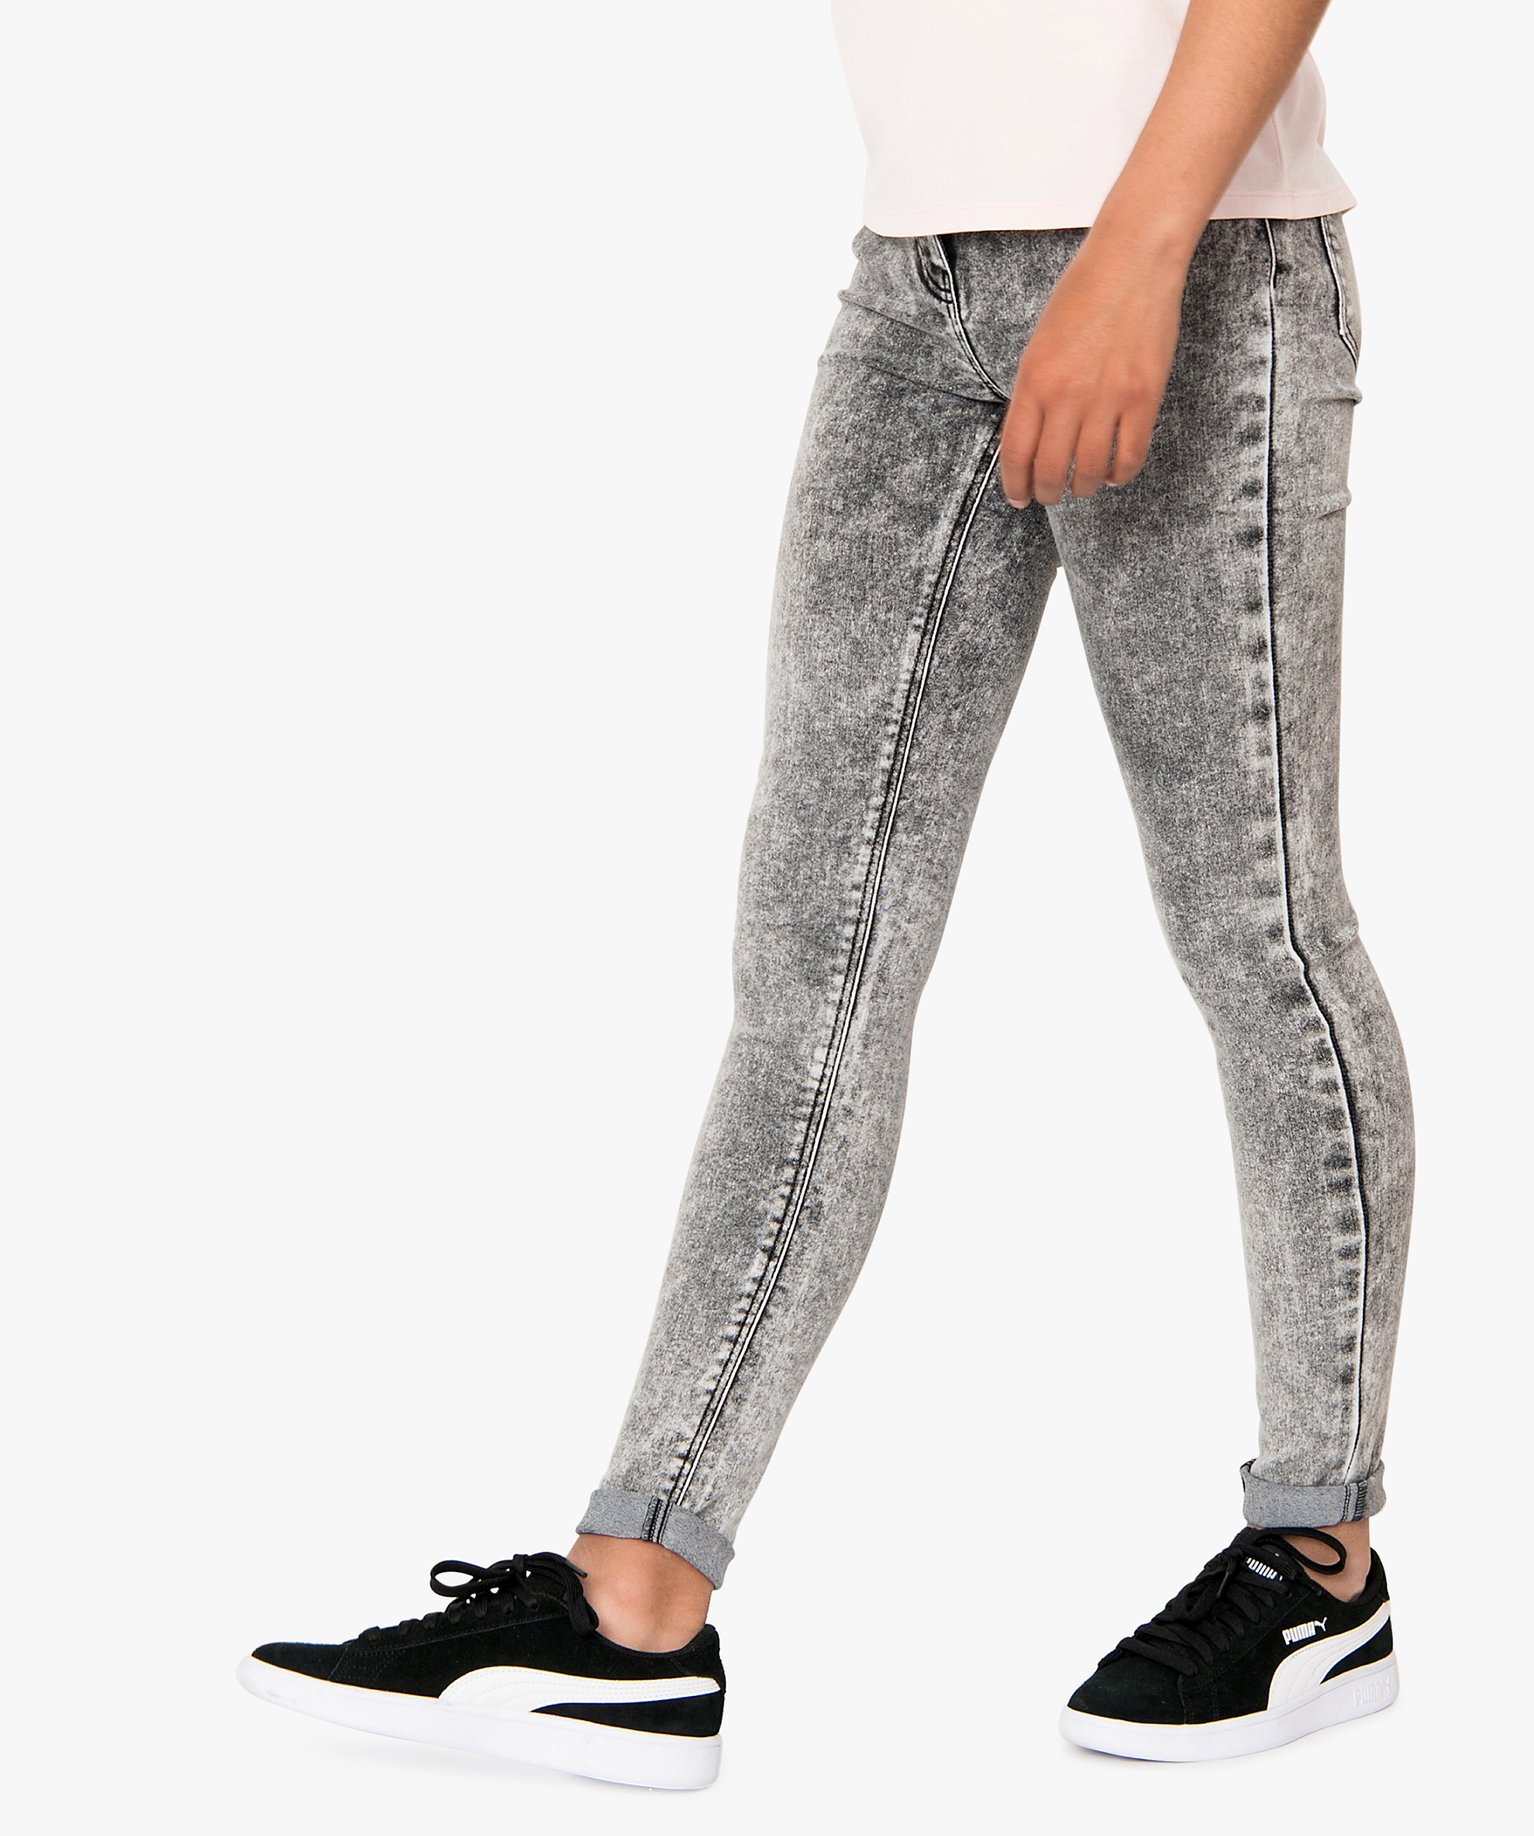 Jean fille coupe Ultra skinny Gemo Fille Vêtements Pantalons & Jeans Jeans Skinny 